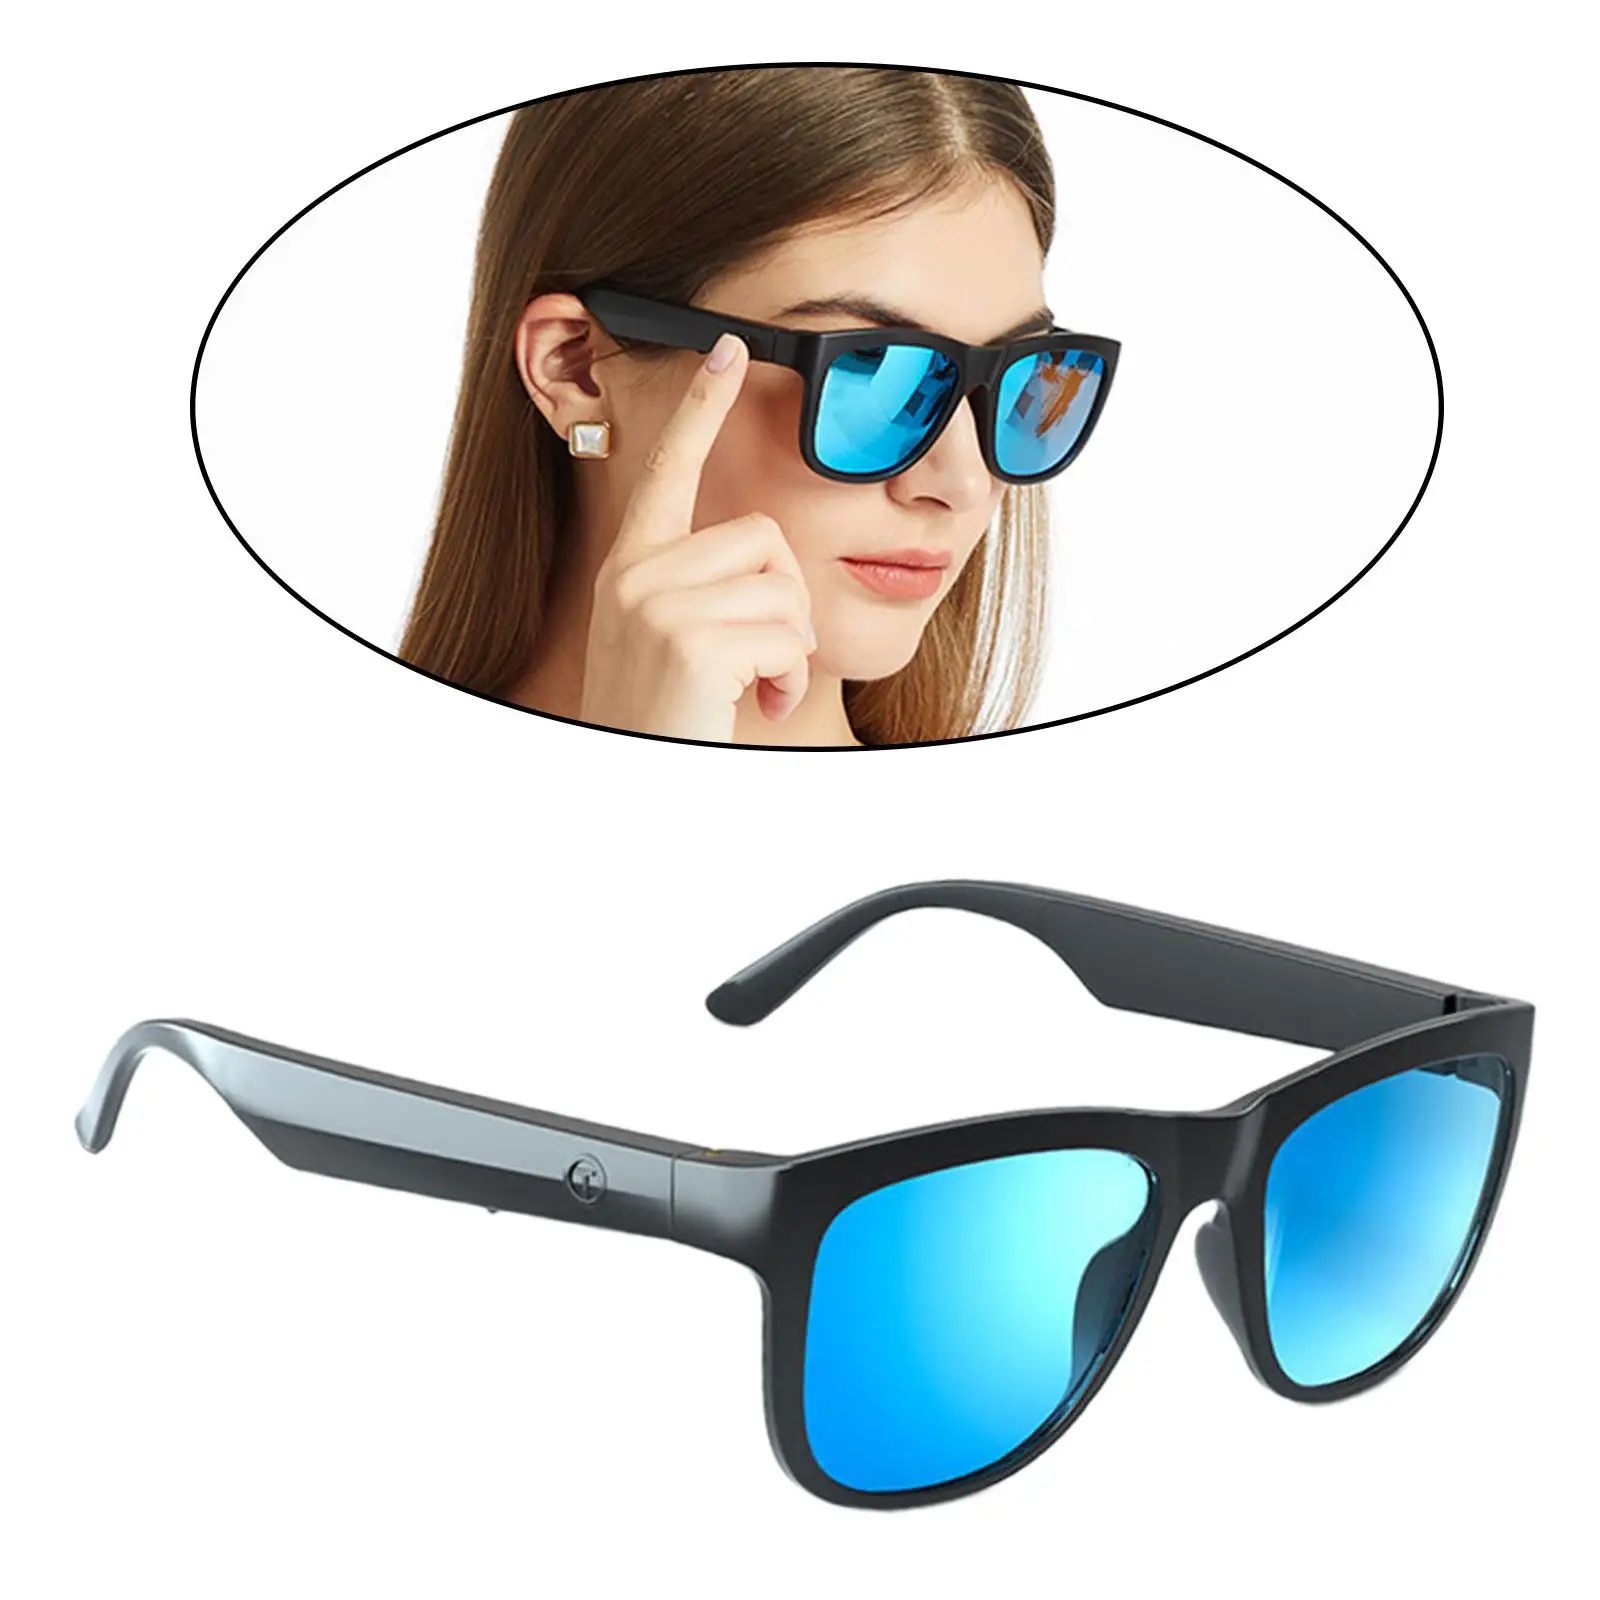 Bluetooth Audio Smart Glasses, Handfree Call Intelligent Eyeglasses for Outdoor Sport